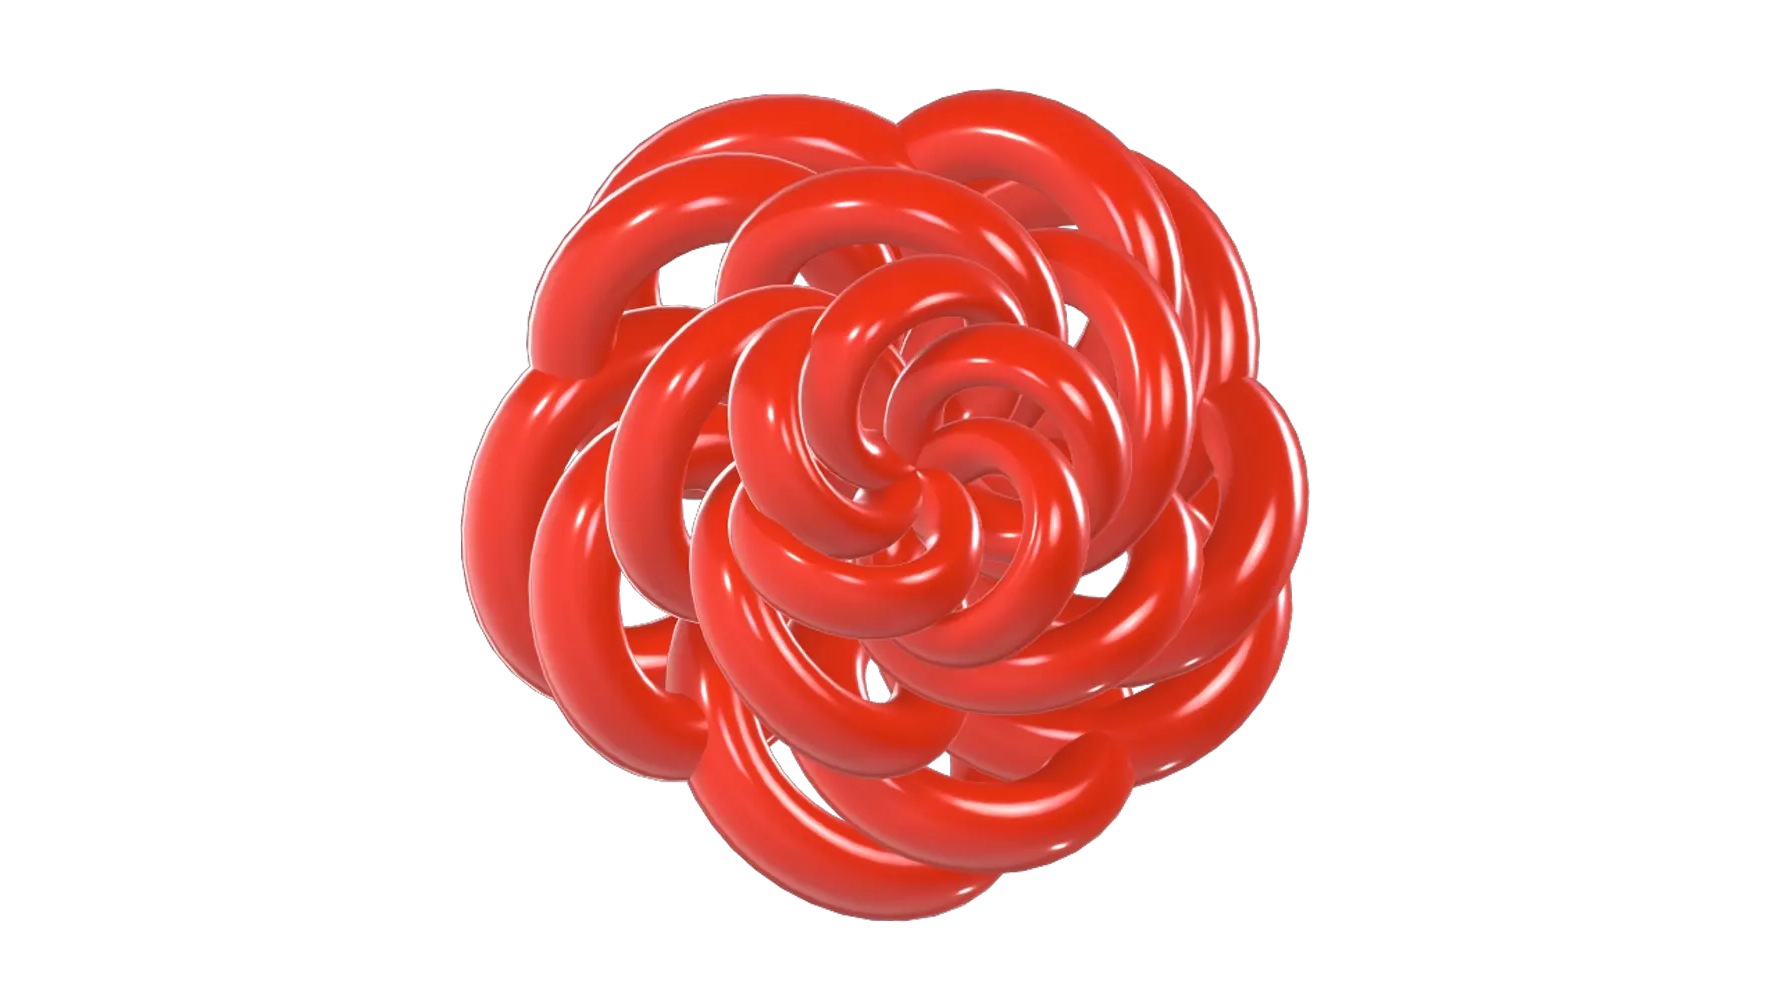 Carnation Flower Balloon 3D Graphic